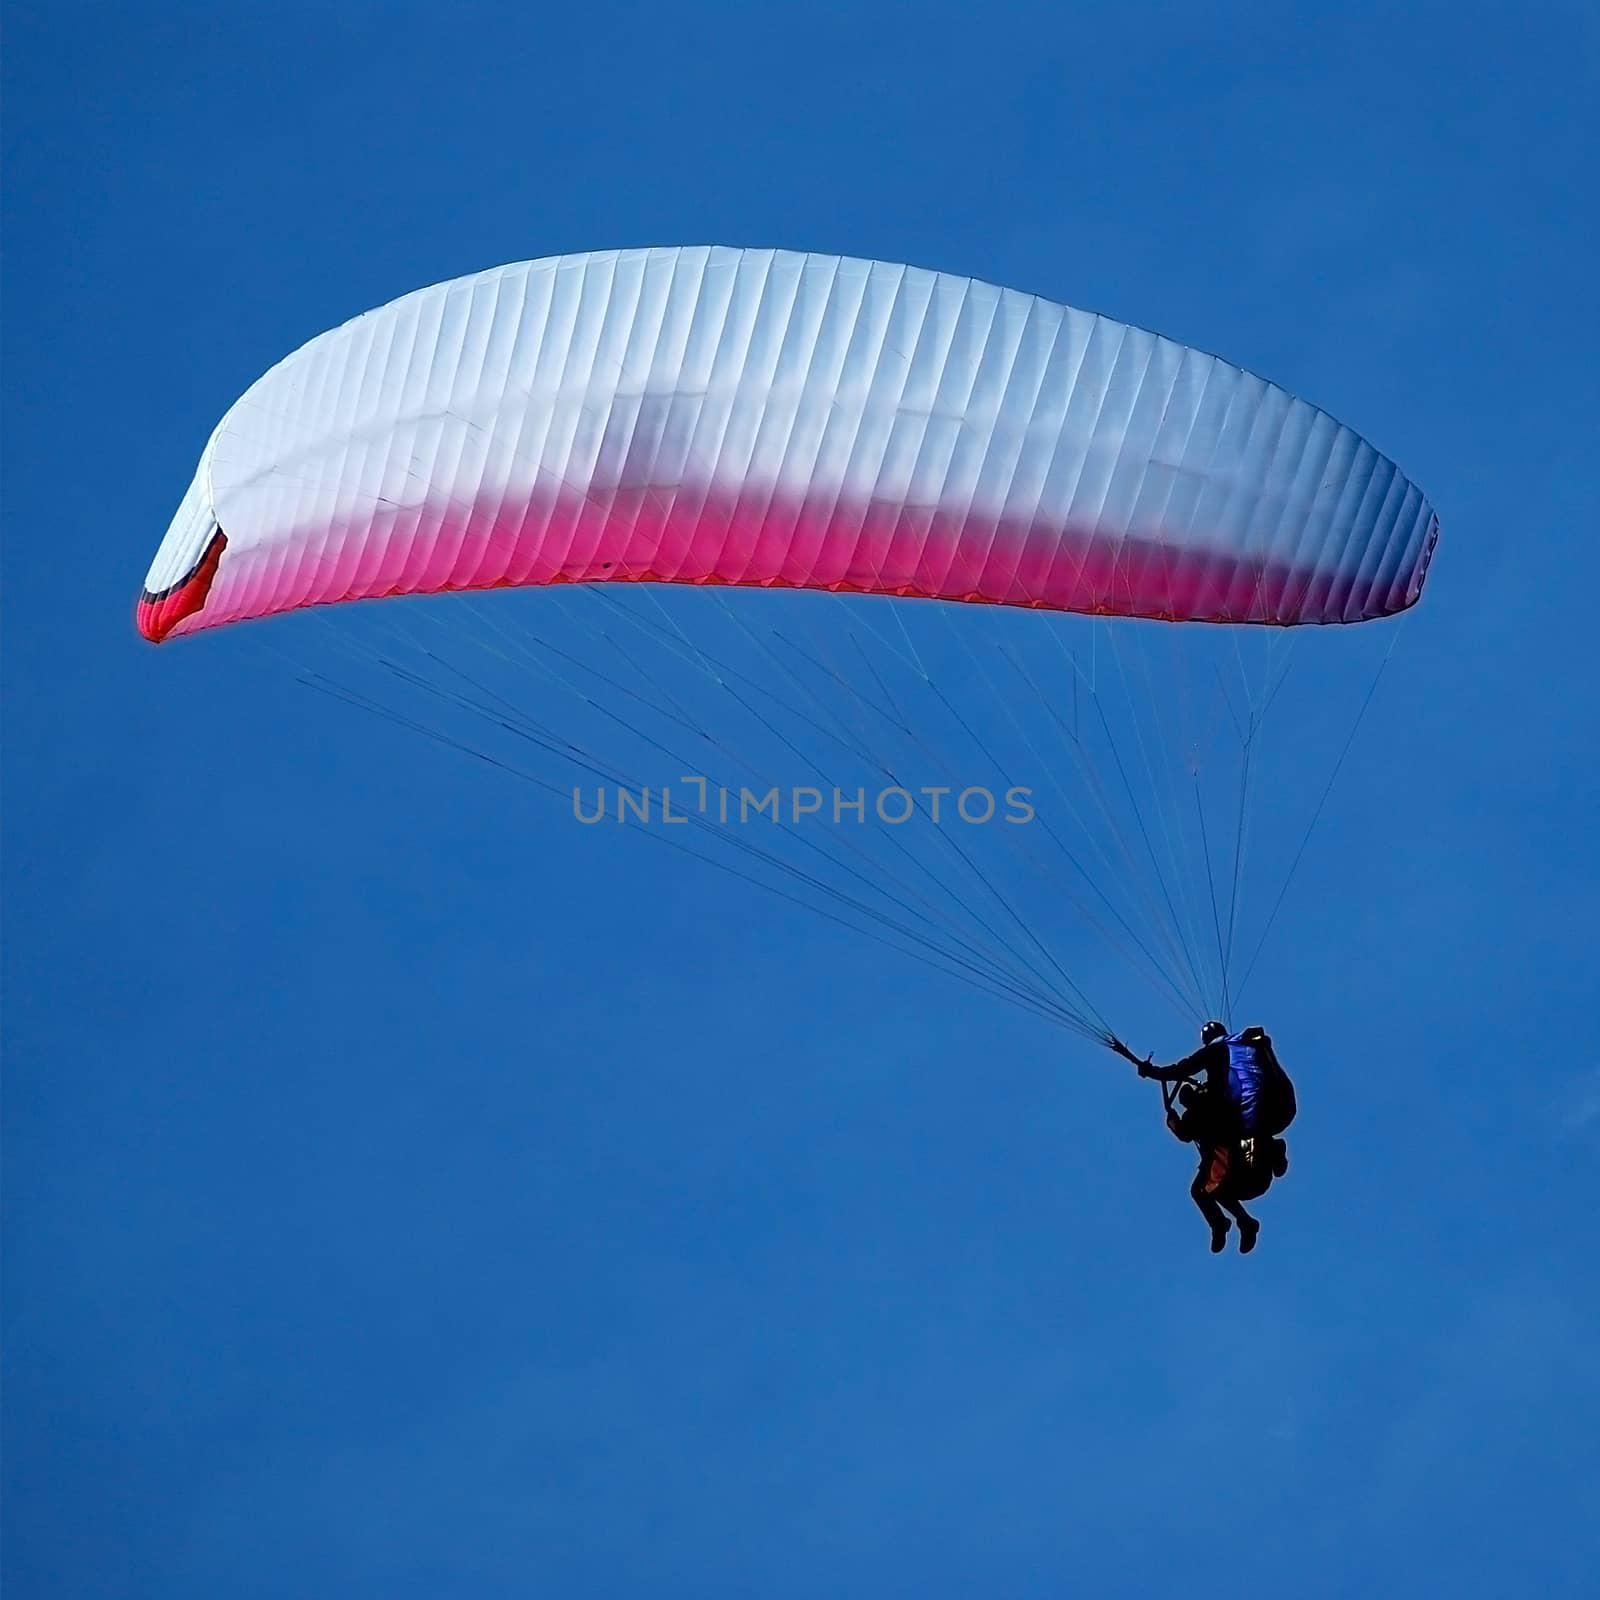 Tandem paragliding by studio023